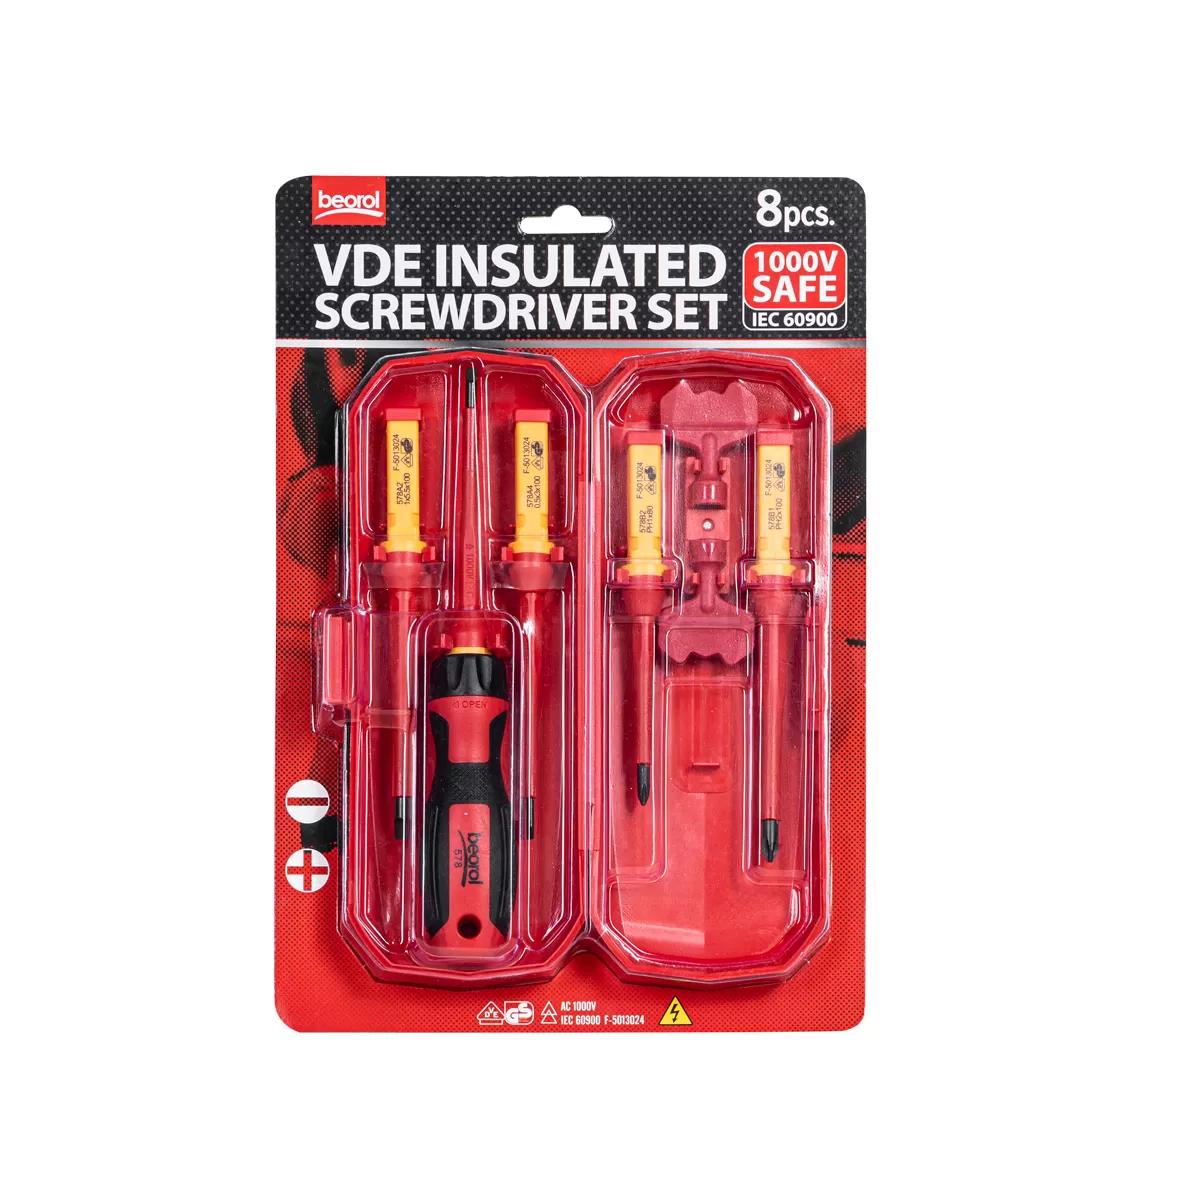 8pcs VDE insulated screwdriver set 